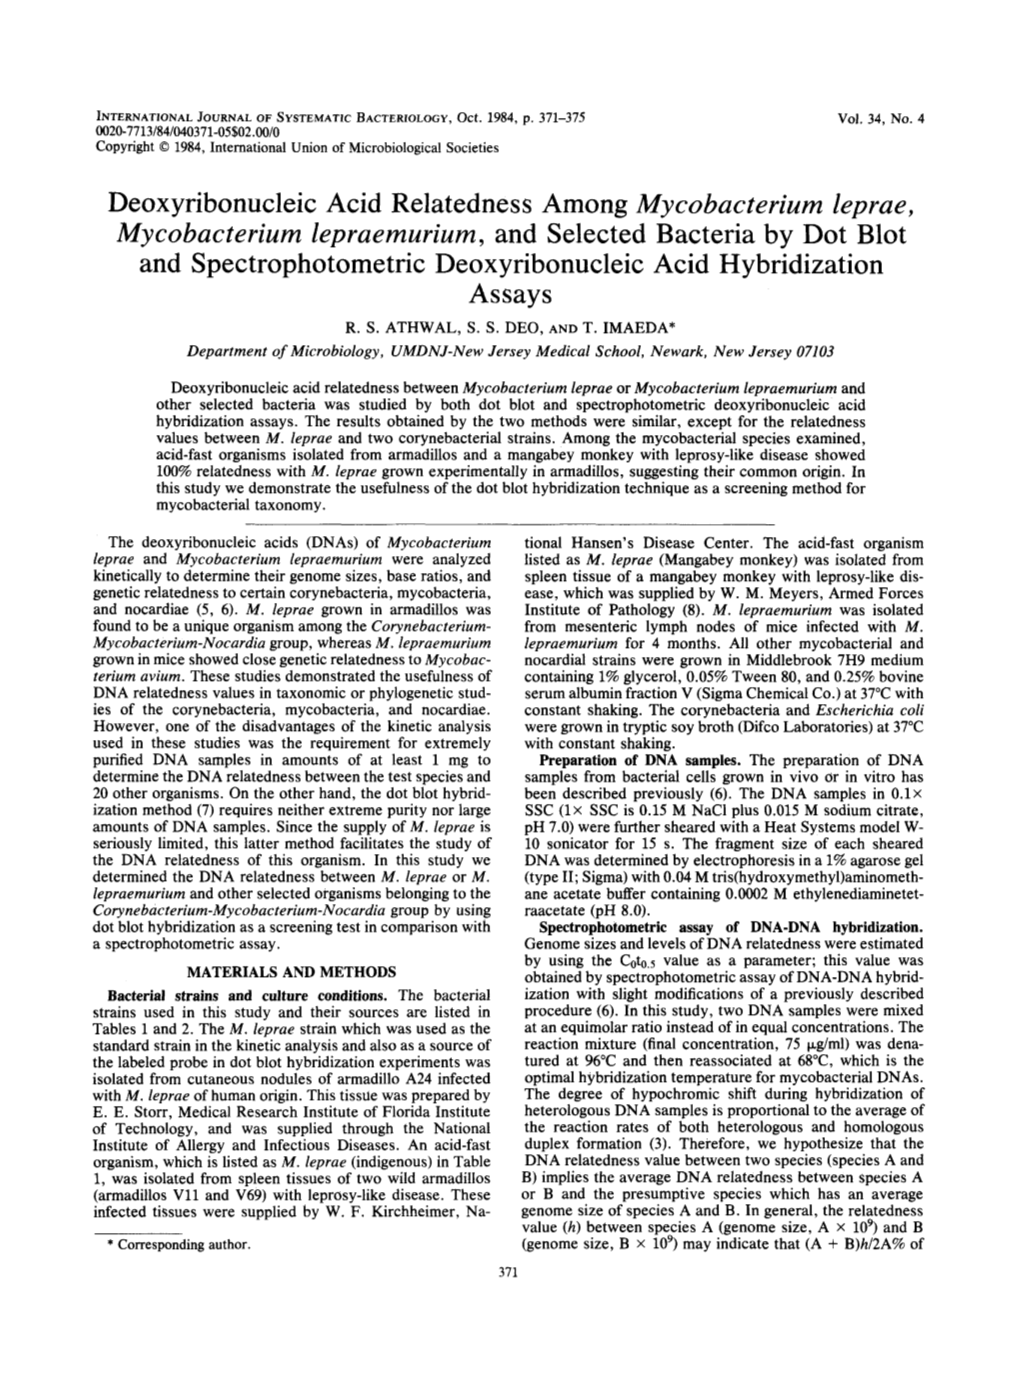 Deoxyribonucleic Acid Relatedness Among Mycobacterium Leprae, Mycobacterium Lepraernuriurn, and Selected Bacteria by Dot Blot An